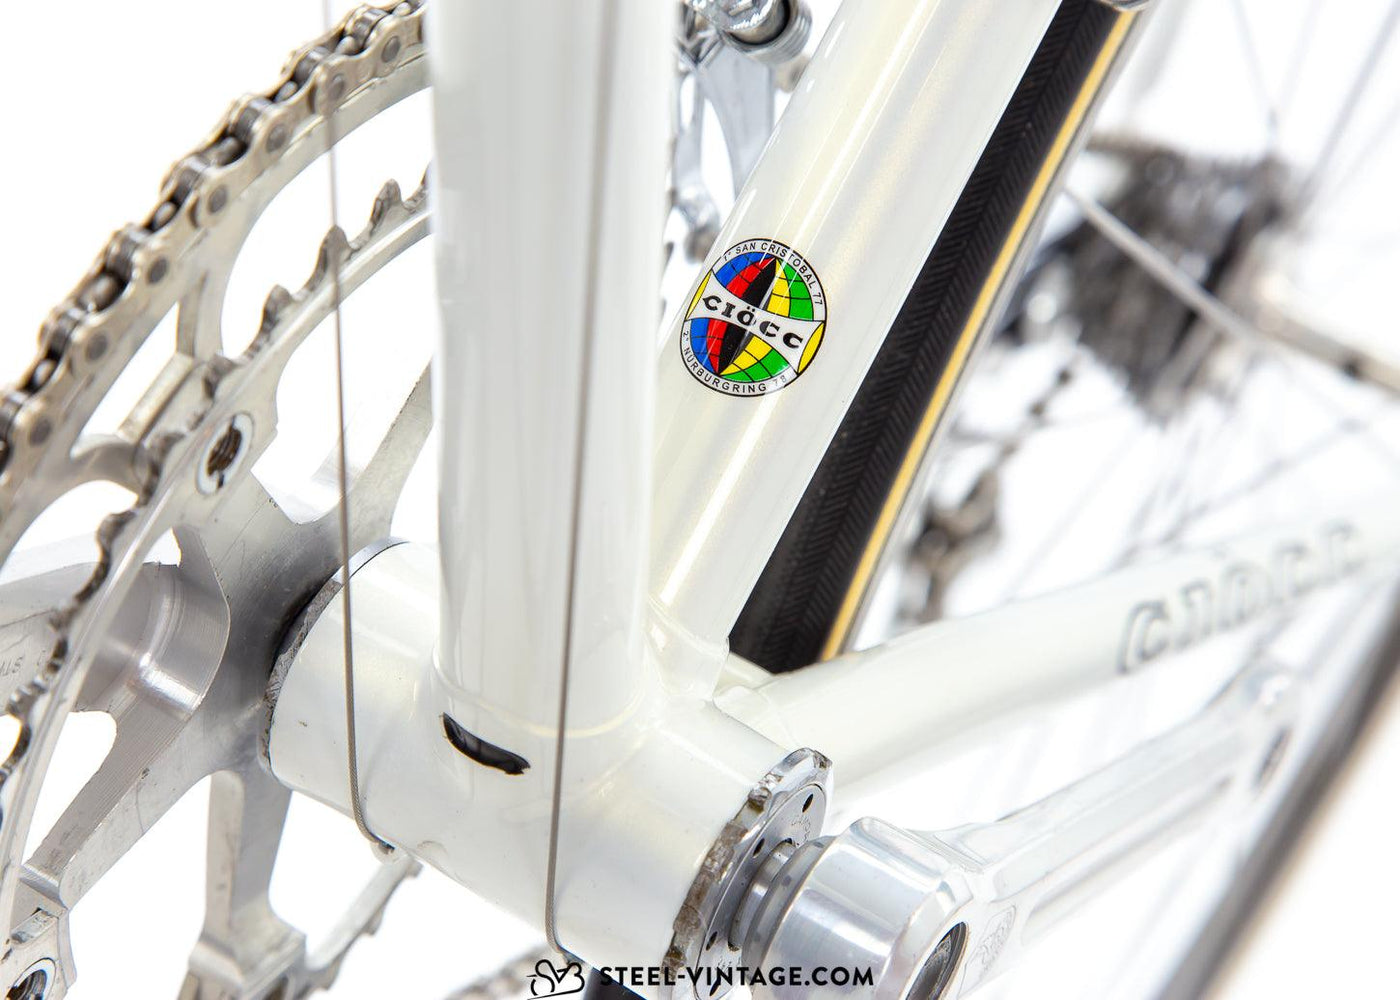 Ciöcc San Cristobal Classic White Road Bike 1980s - Steel Vintage Bikes